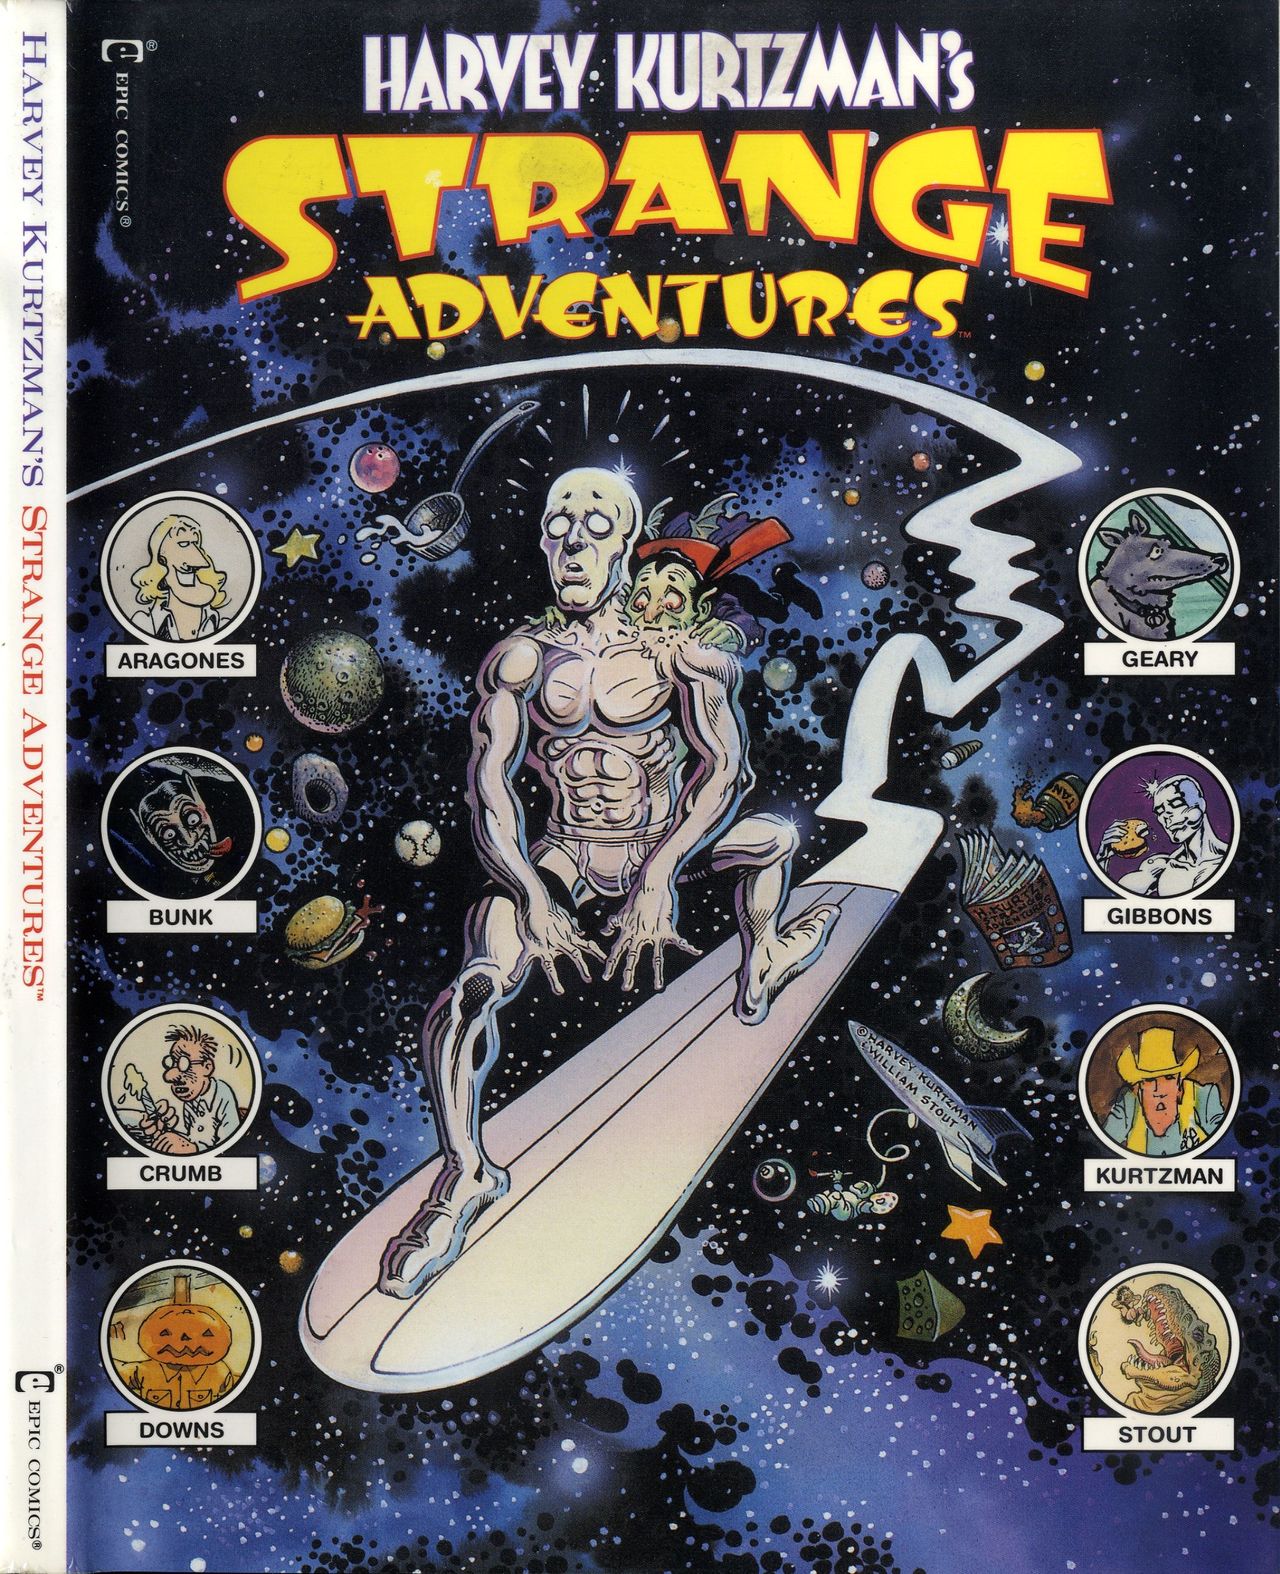 Read online Harvey Kurtzman's Strange Adventures comic -  Issue # TPB - 1